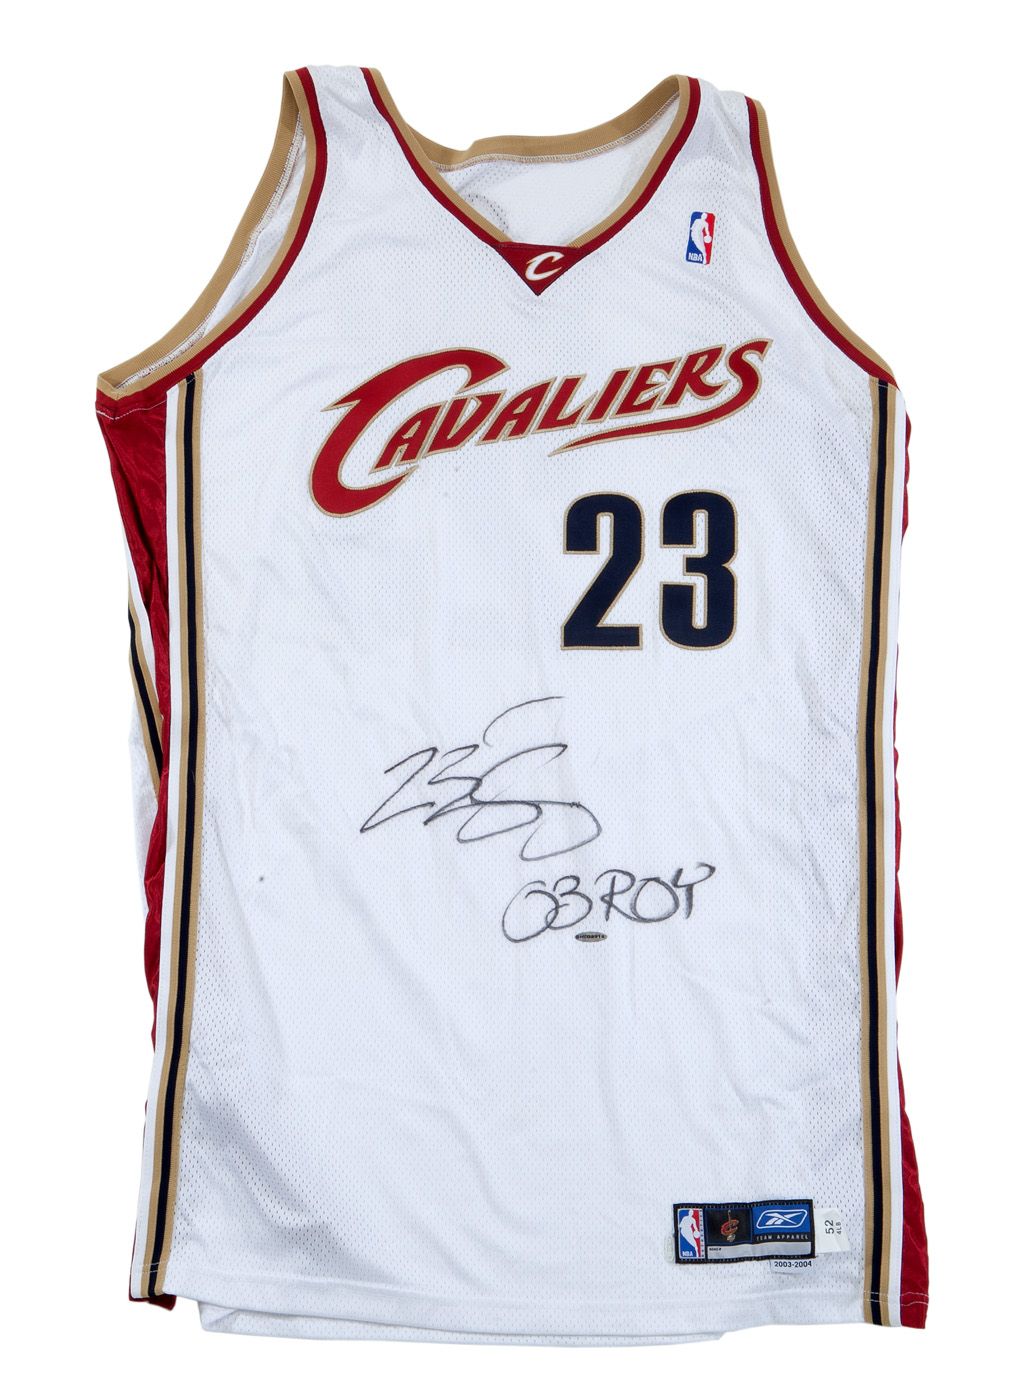 2003-04 LeBron James Signed Cleveland Cavaliers Jersey - UDA, Lot #80927